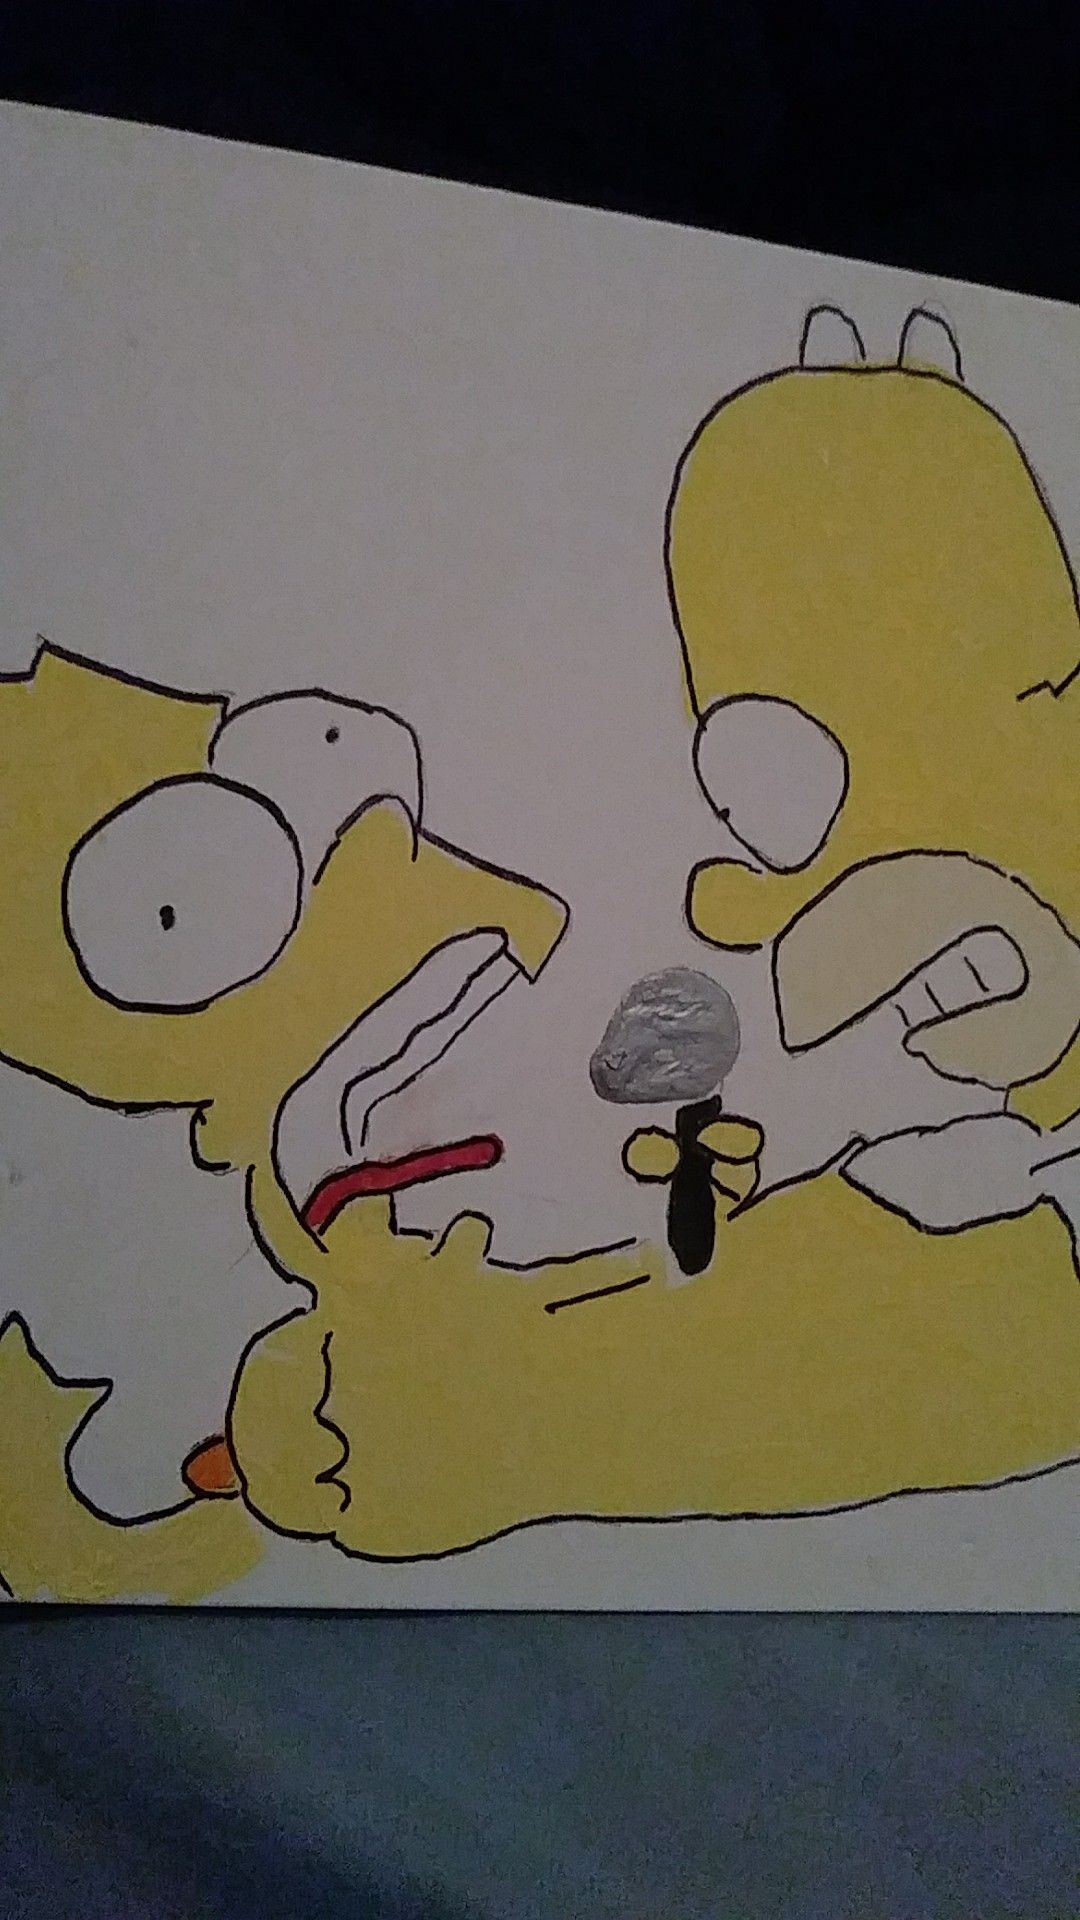 Homer choking bart